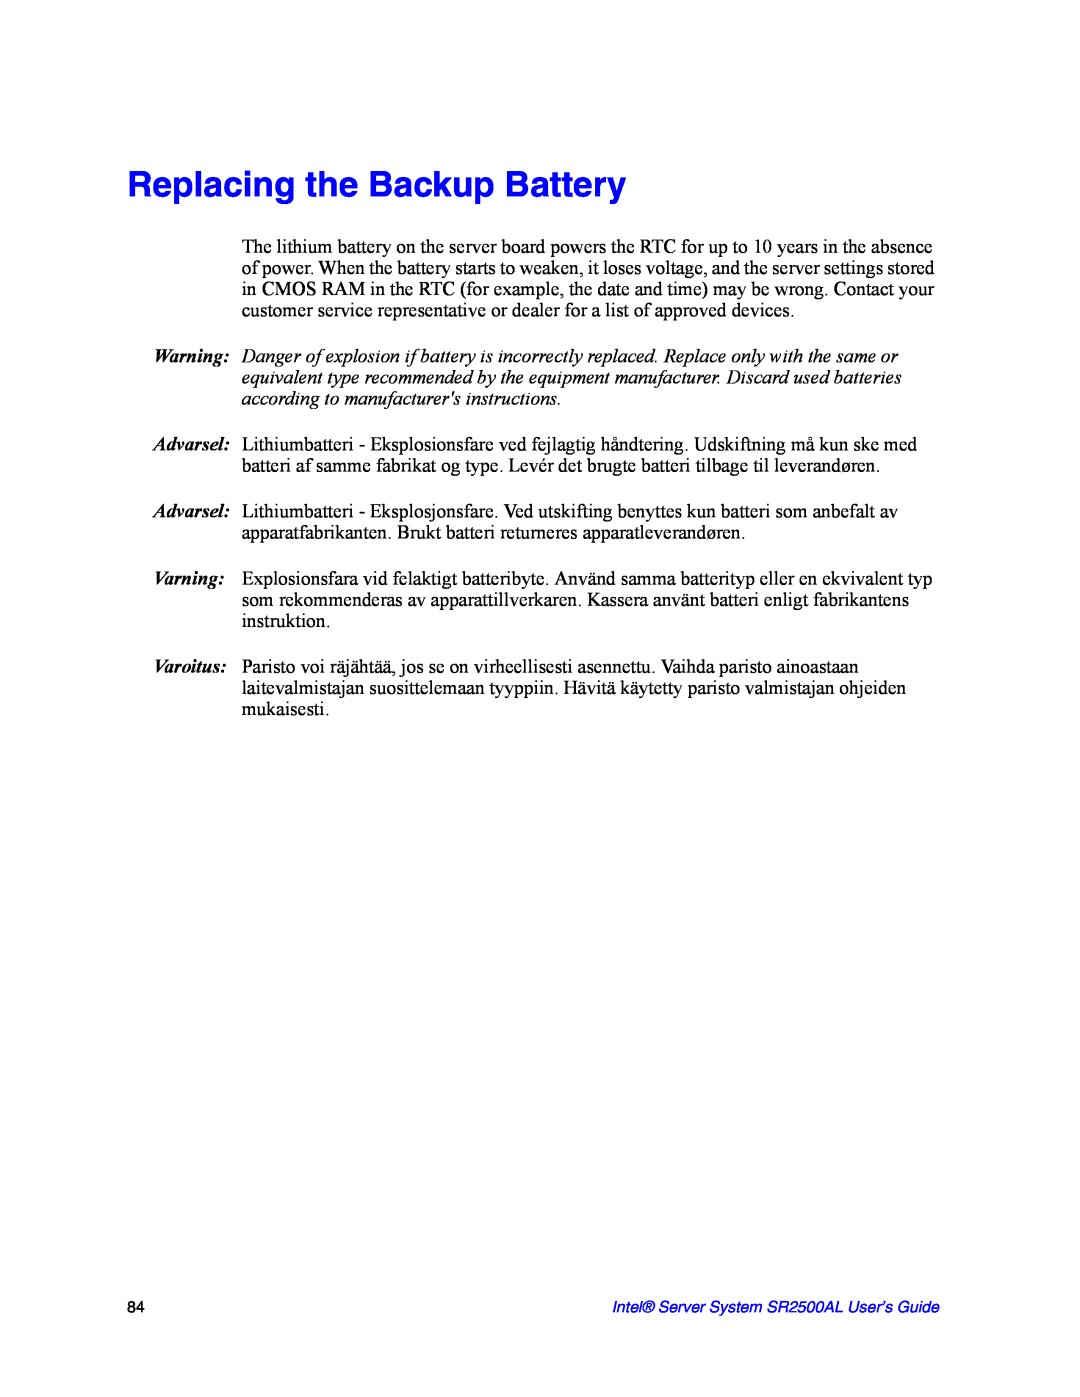 Intel SR2500AL manual Replacing the Backup Battery 